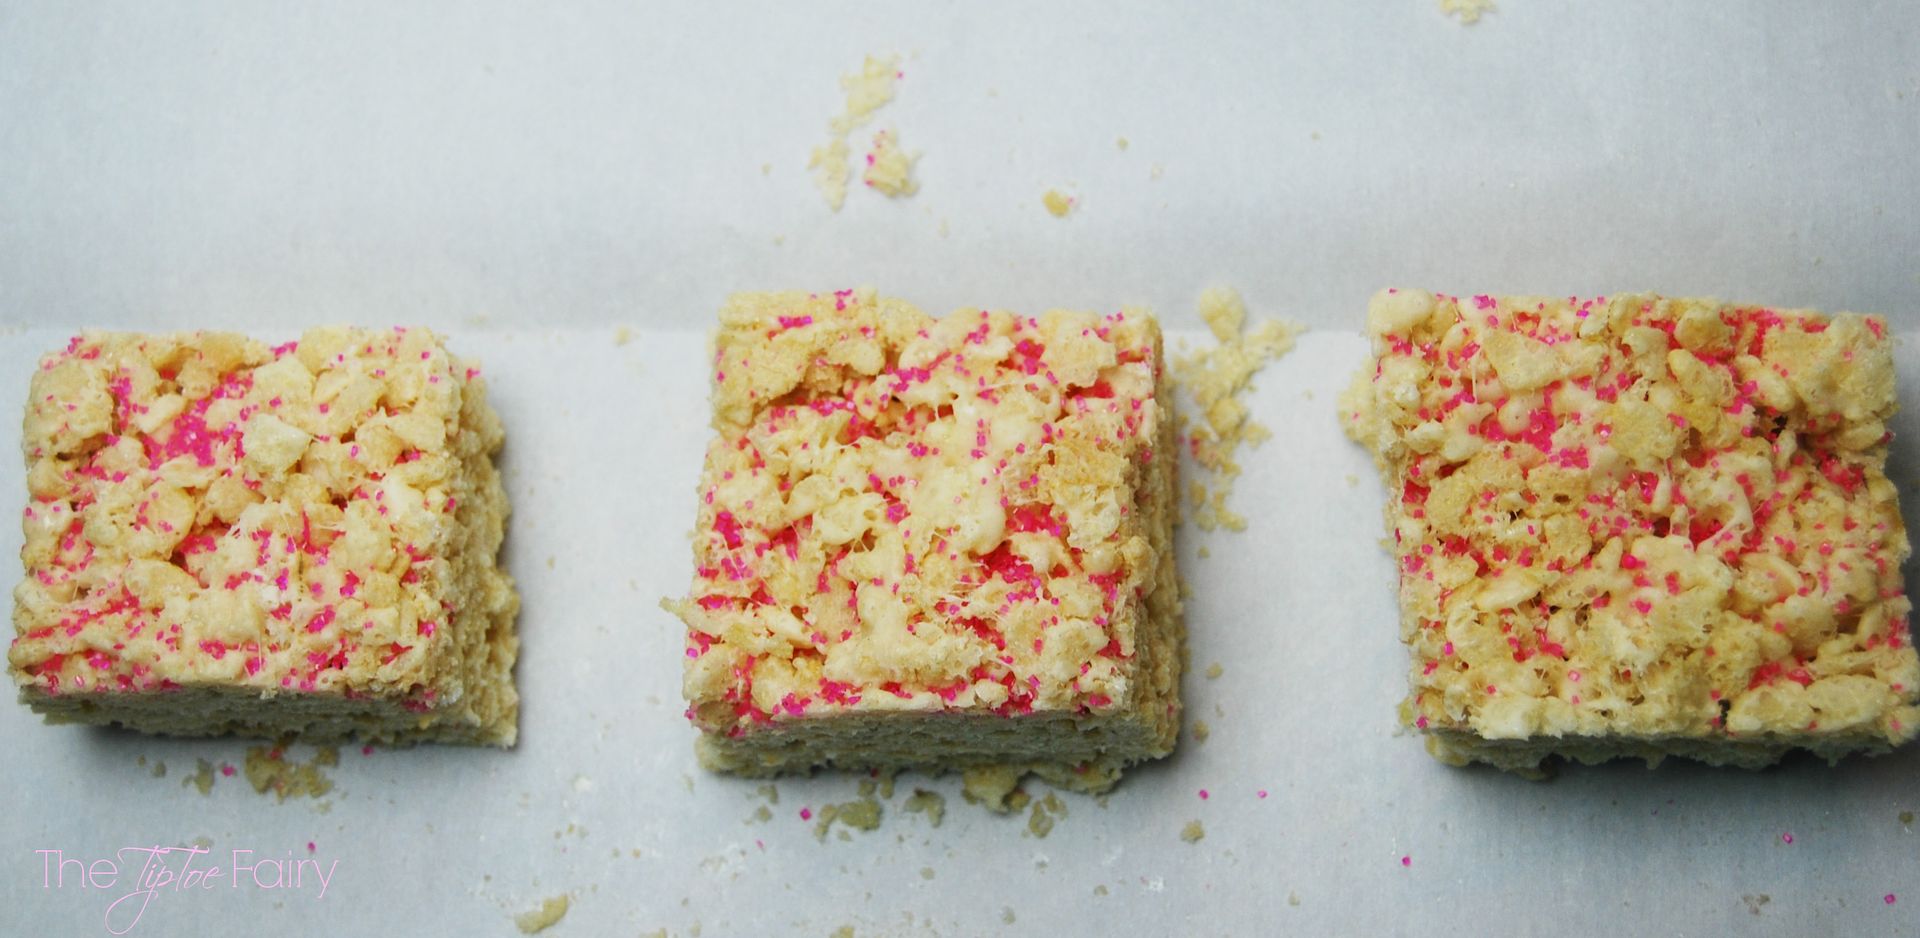 Cake Batter Rice Crispy Treats | The TipToe Fairy #cakebatter #ricecrispytreats #dessertrecipes